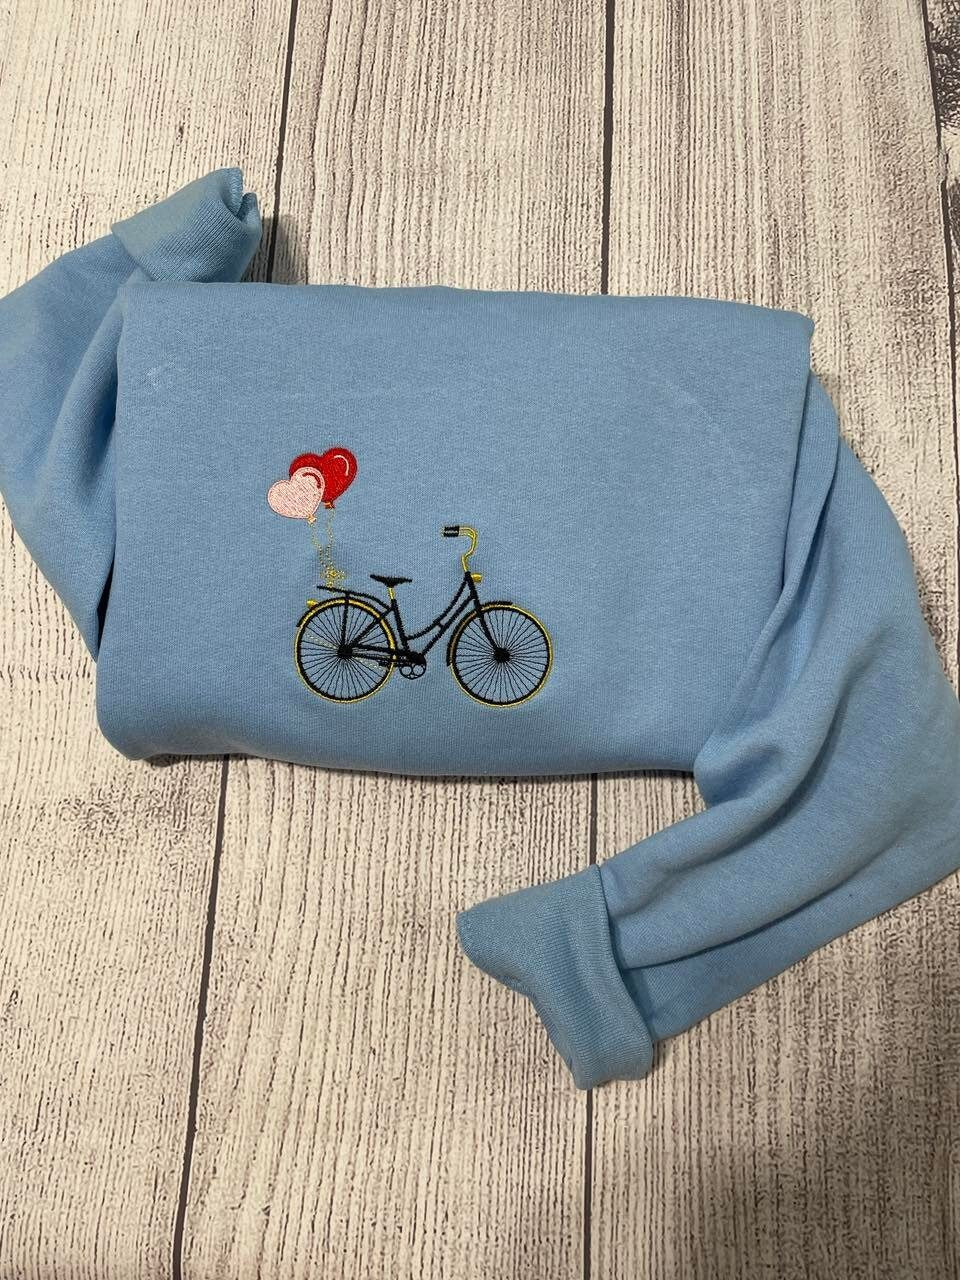 Embroidered Bicycle sweatshirt; Valentine sweatshirt; Valentine gift for her; Balloons embroidered crewneck; women gifts; girlfriend gift